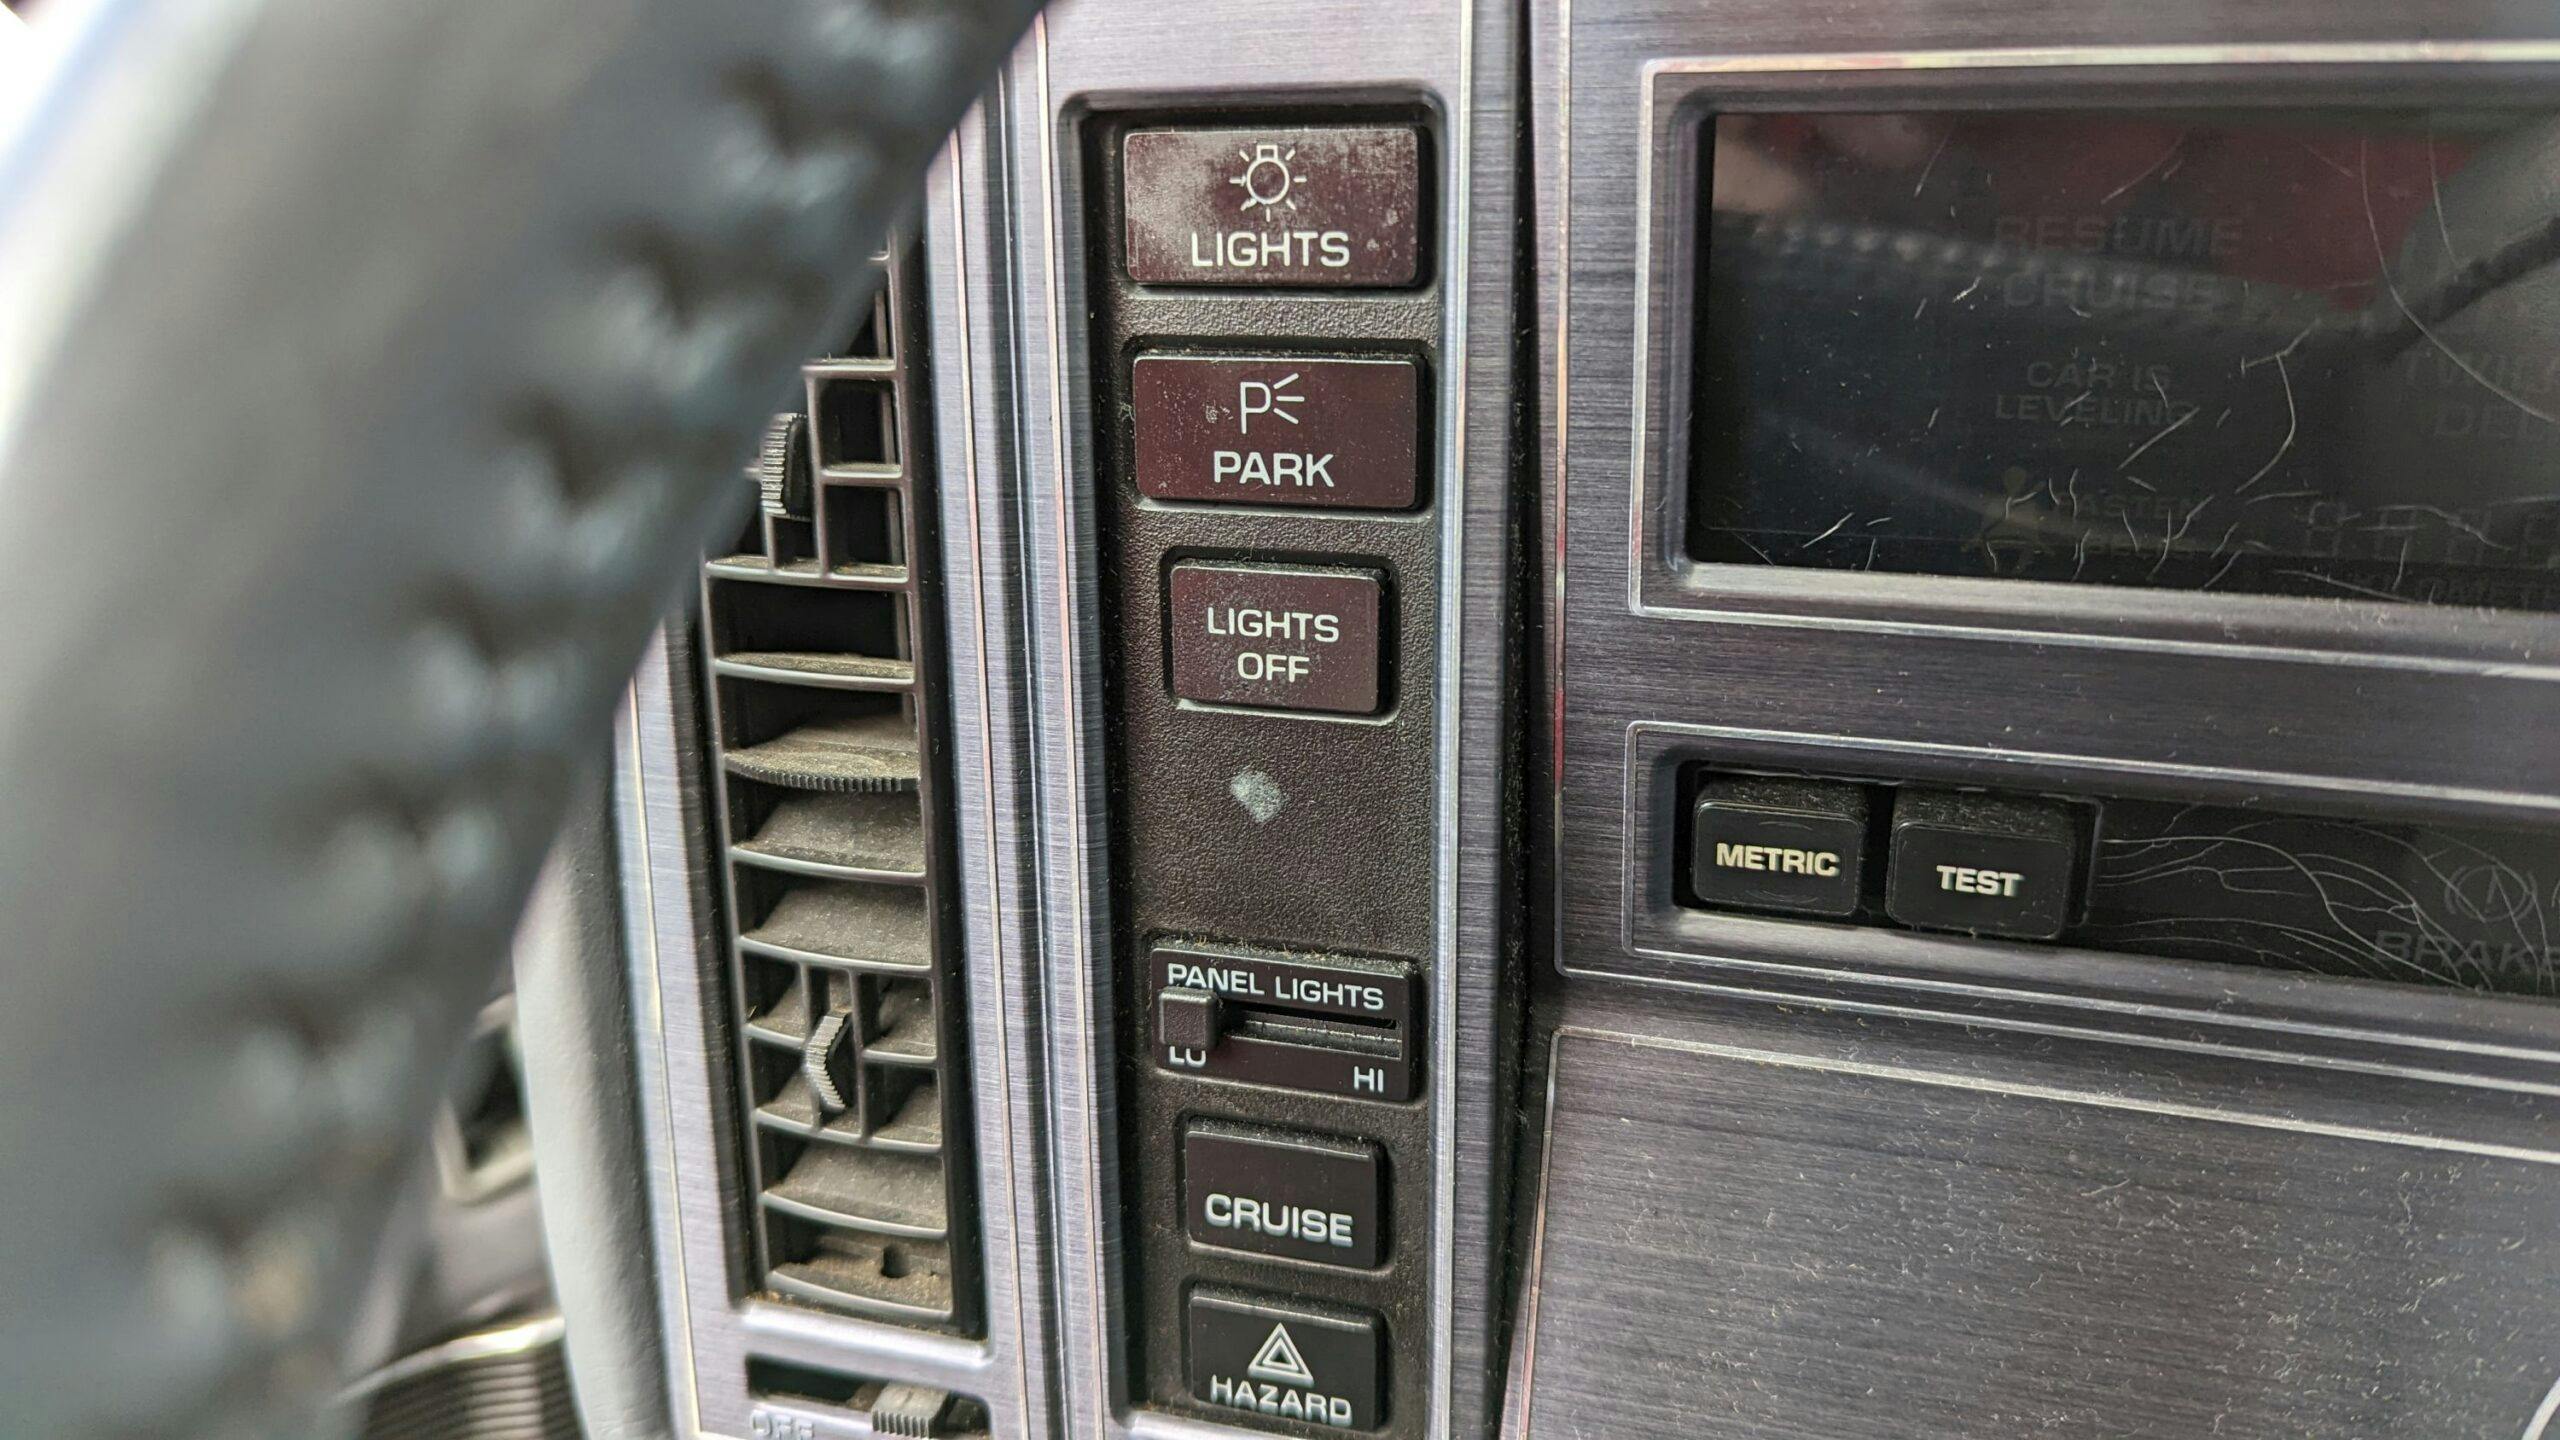 1989 Buick Reatta interior controls detail